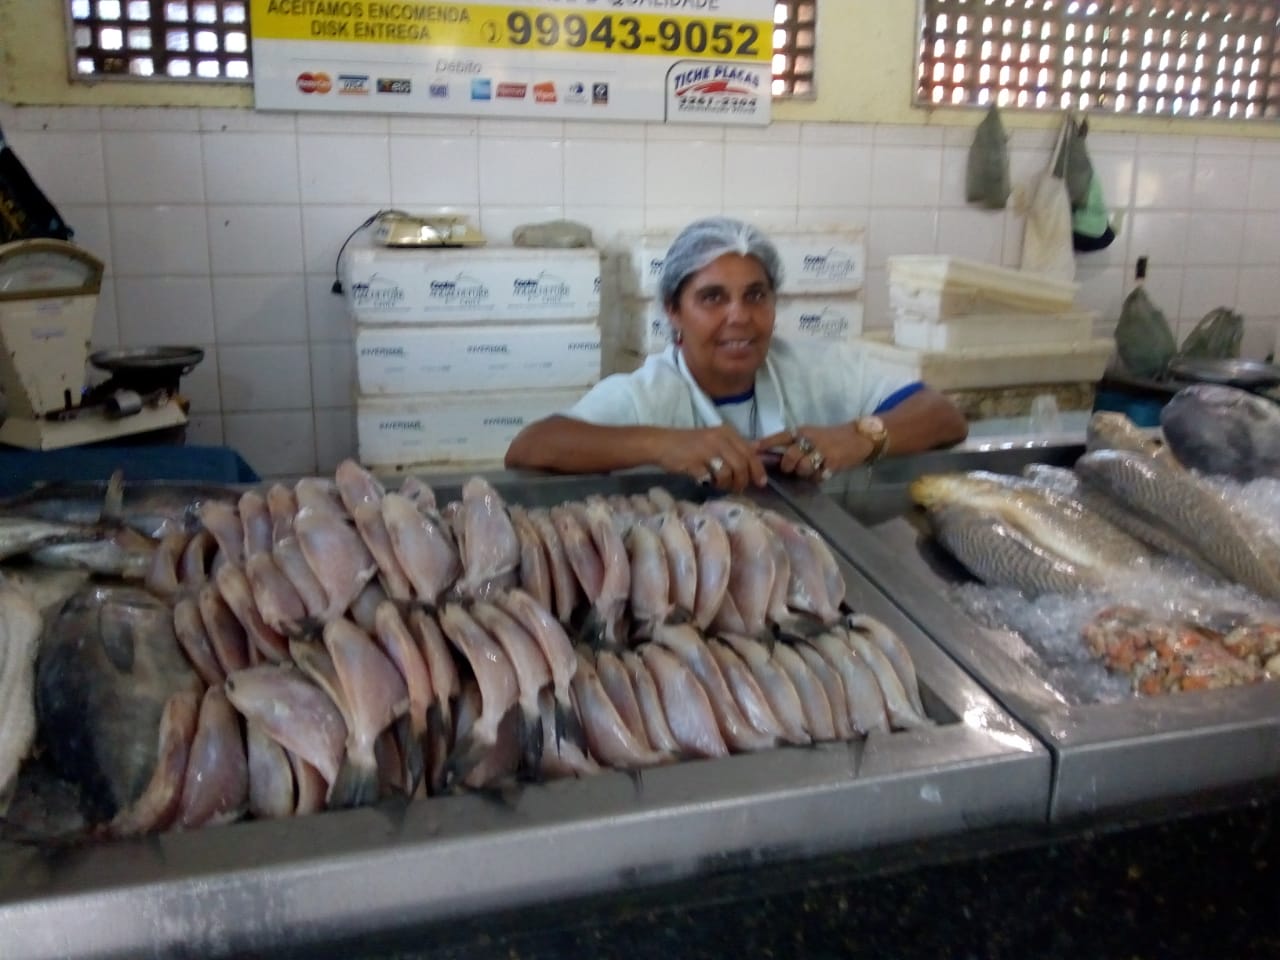 Às vésperas da Semana Santa, expectativa de venda está alta no Mercado de Peixe de Guarapari